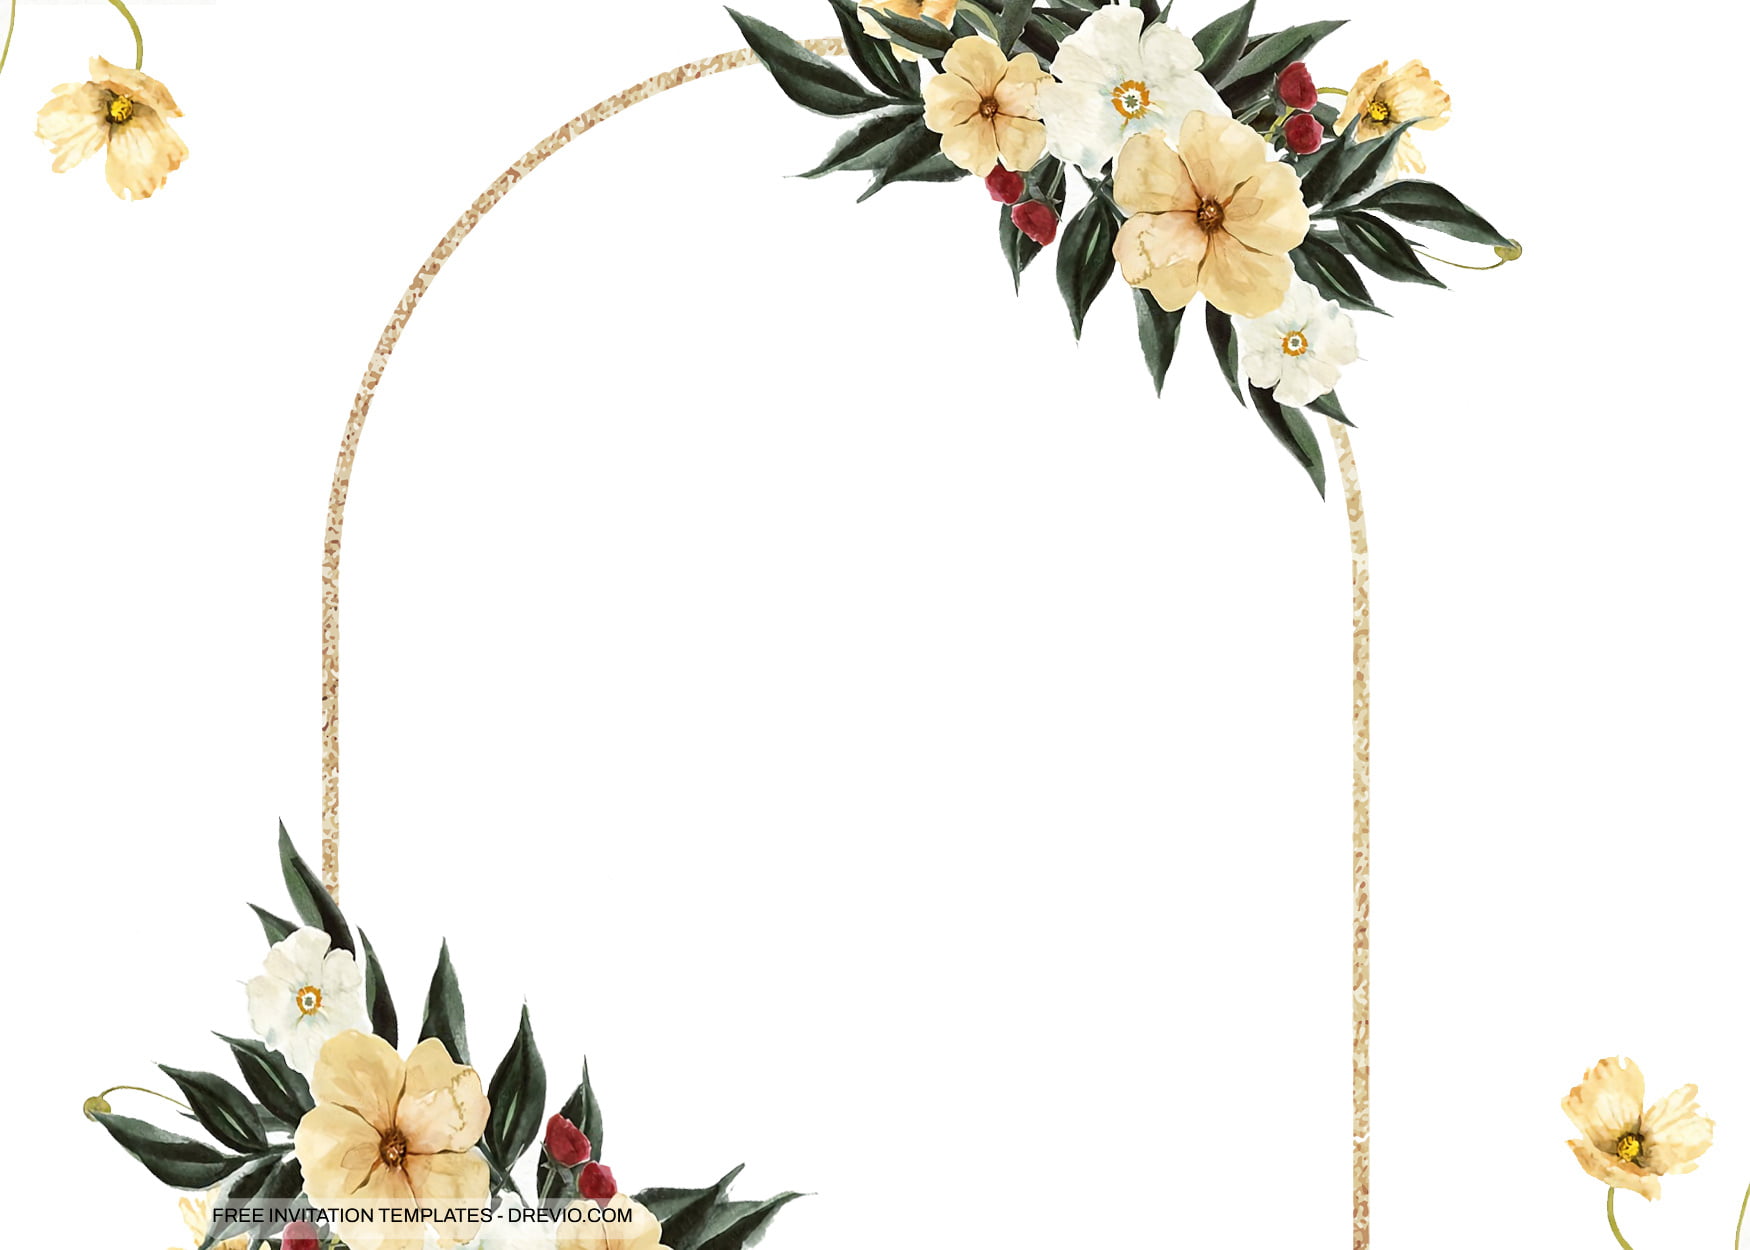 9+ Golden Winter Frame Floral For Invitation Templates